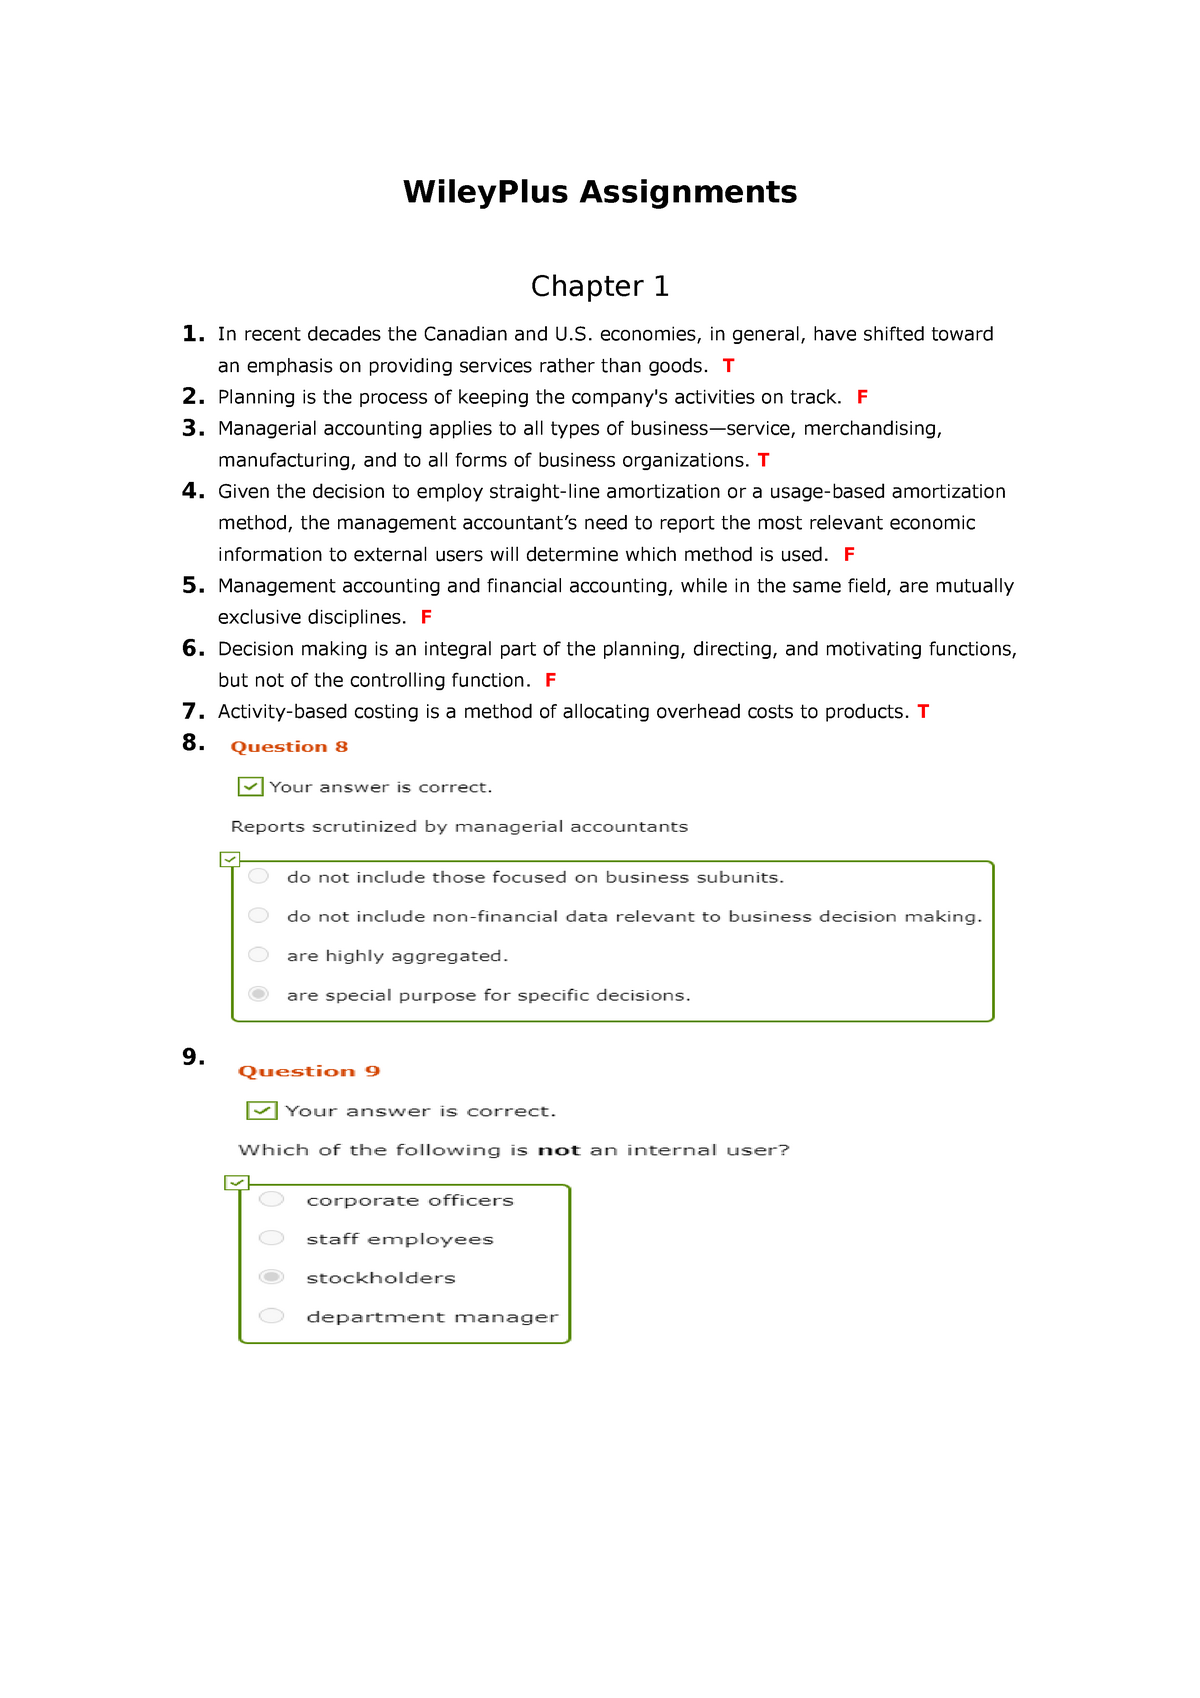 wiley chapter 1 homework